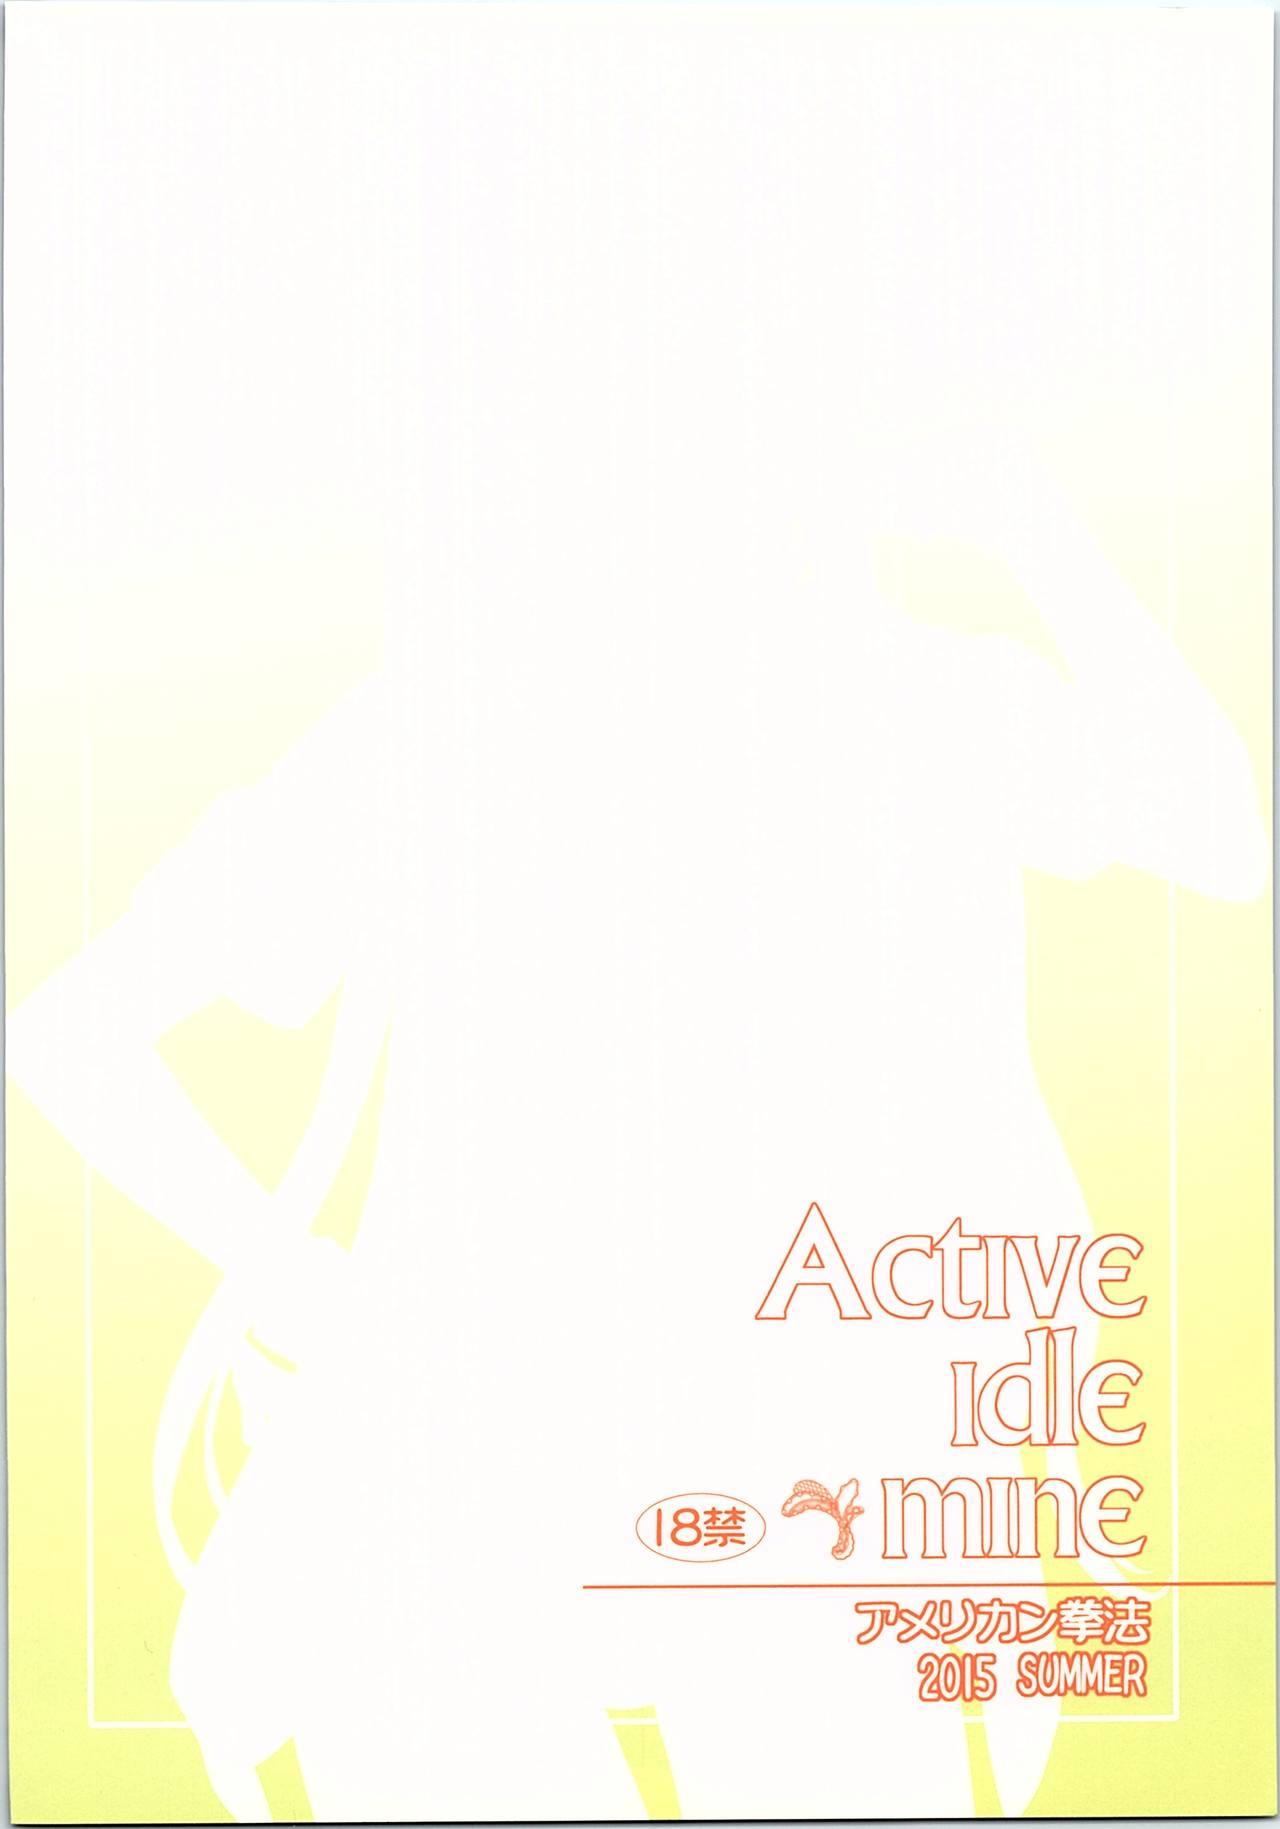 Active idle mine 47